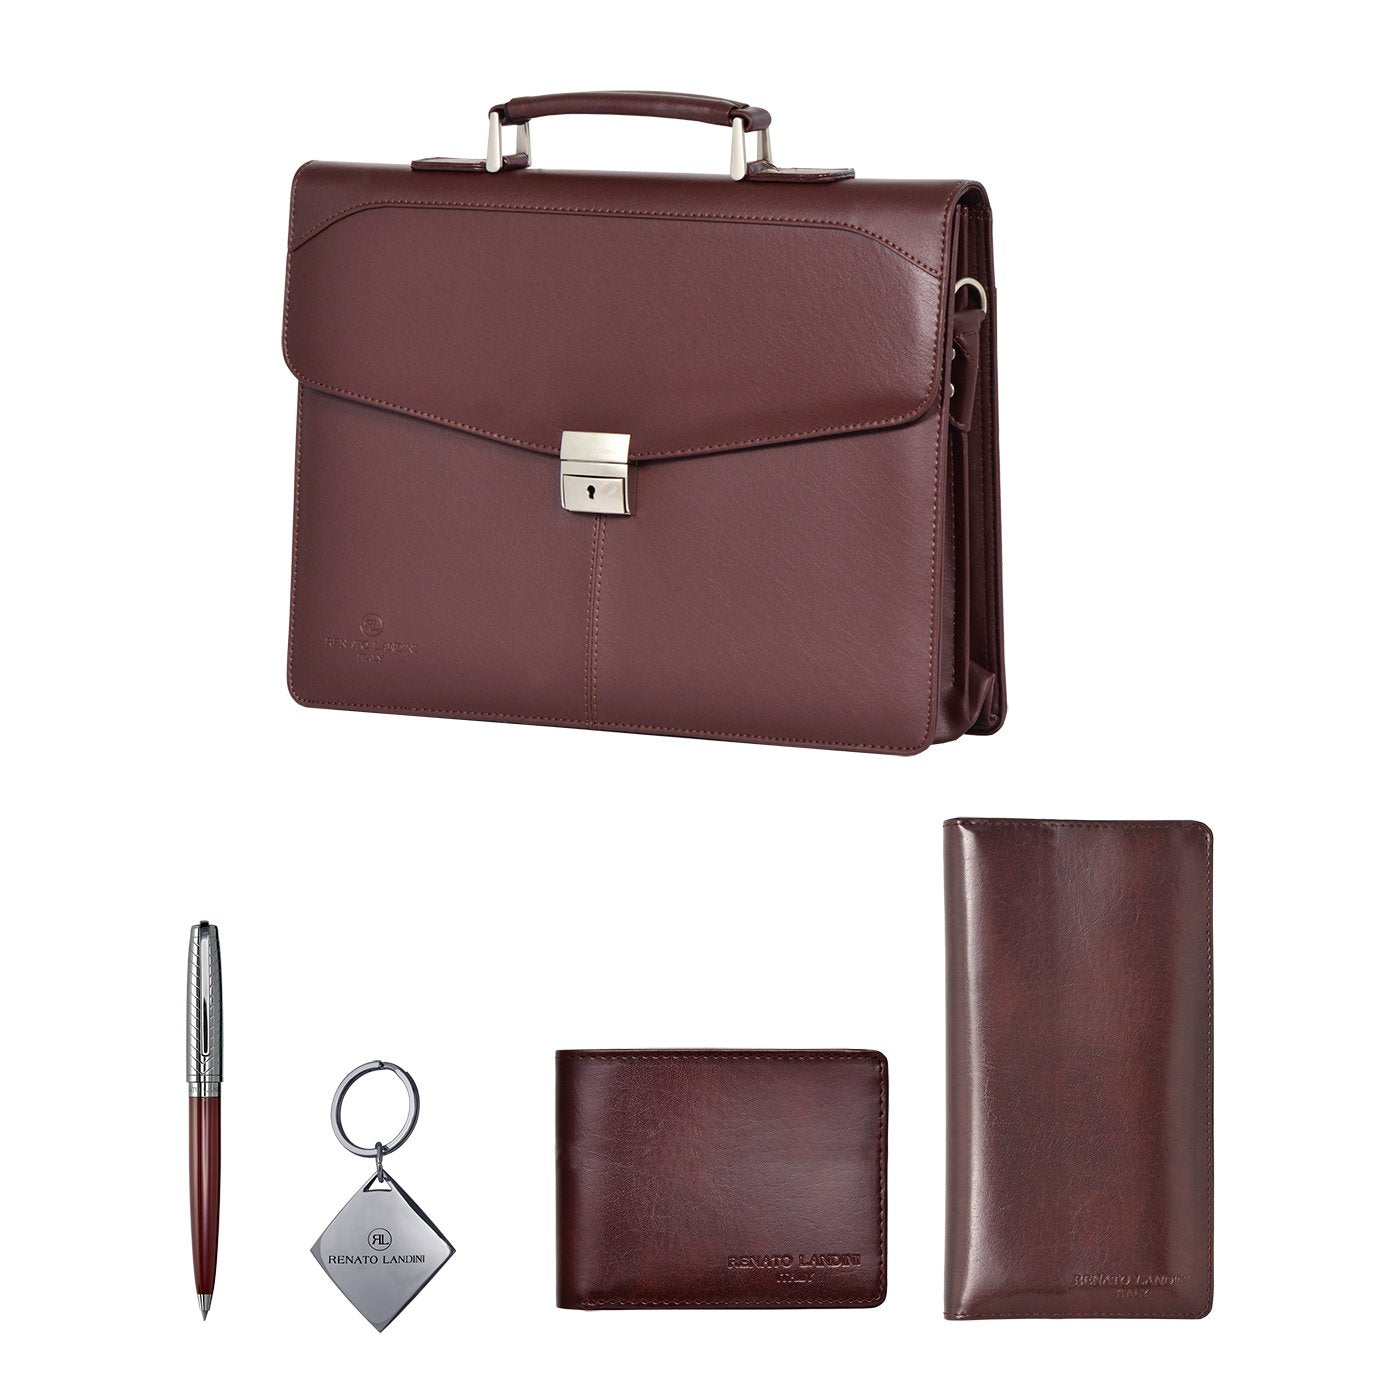 RENATO LANDINI Gift Set: Brown Leather Bag + Pen + Men's Wallet + Travel Wallet + Key Holder